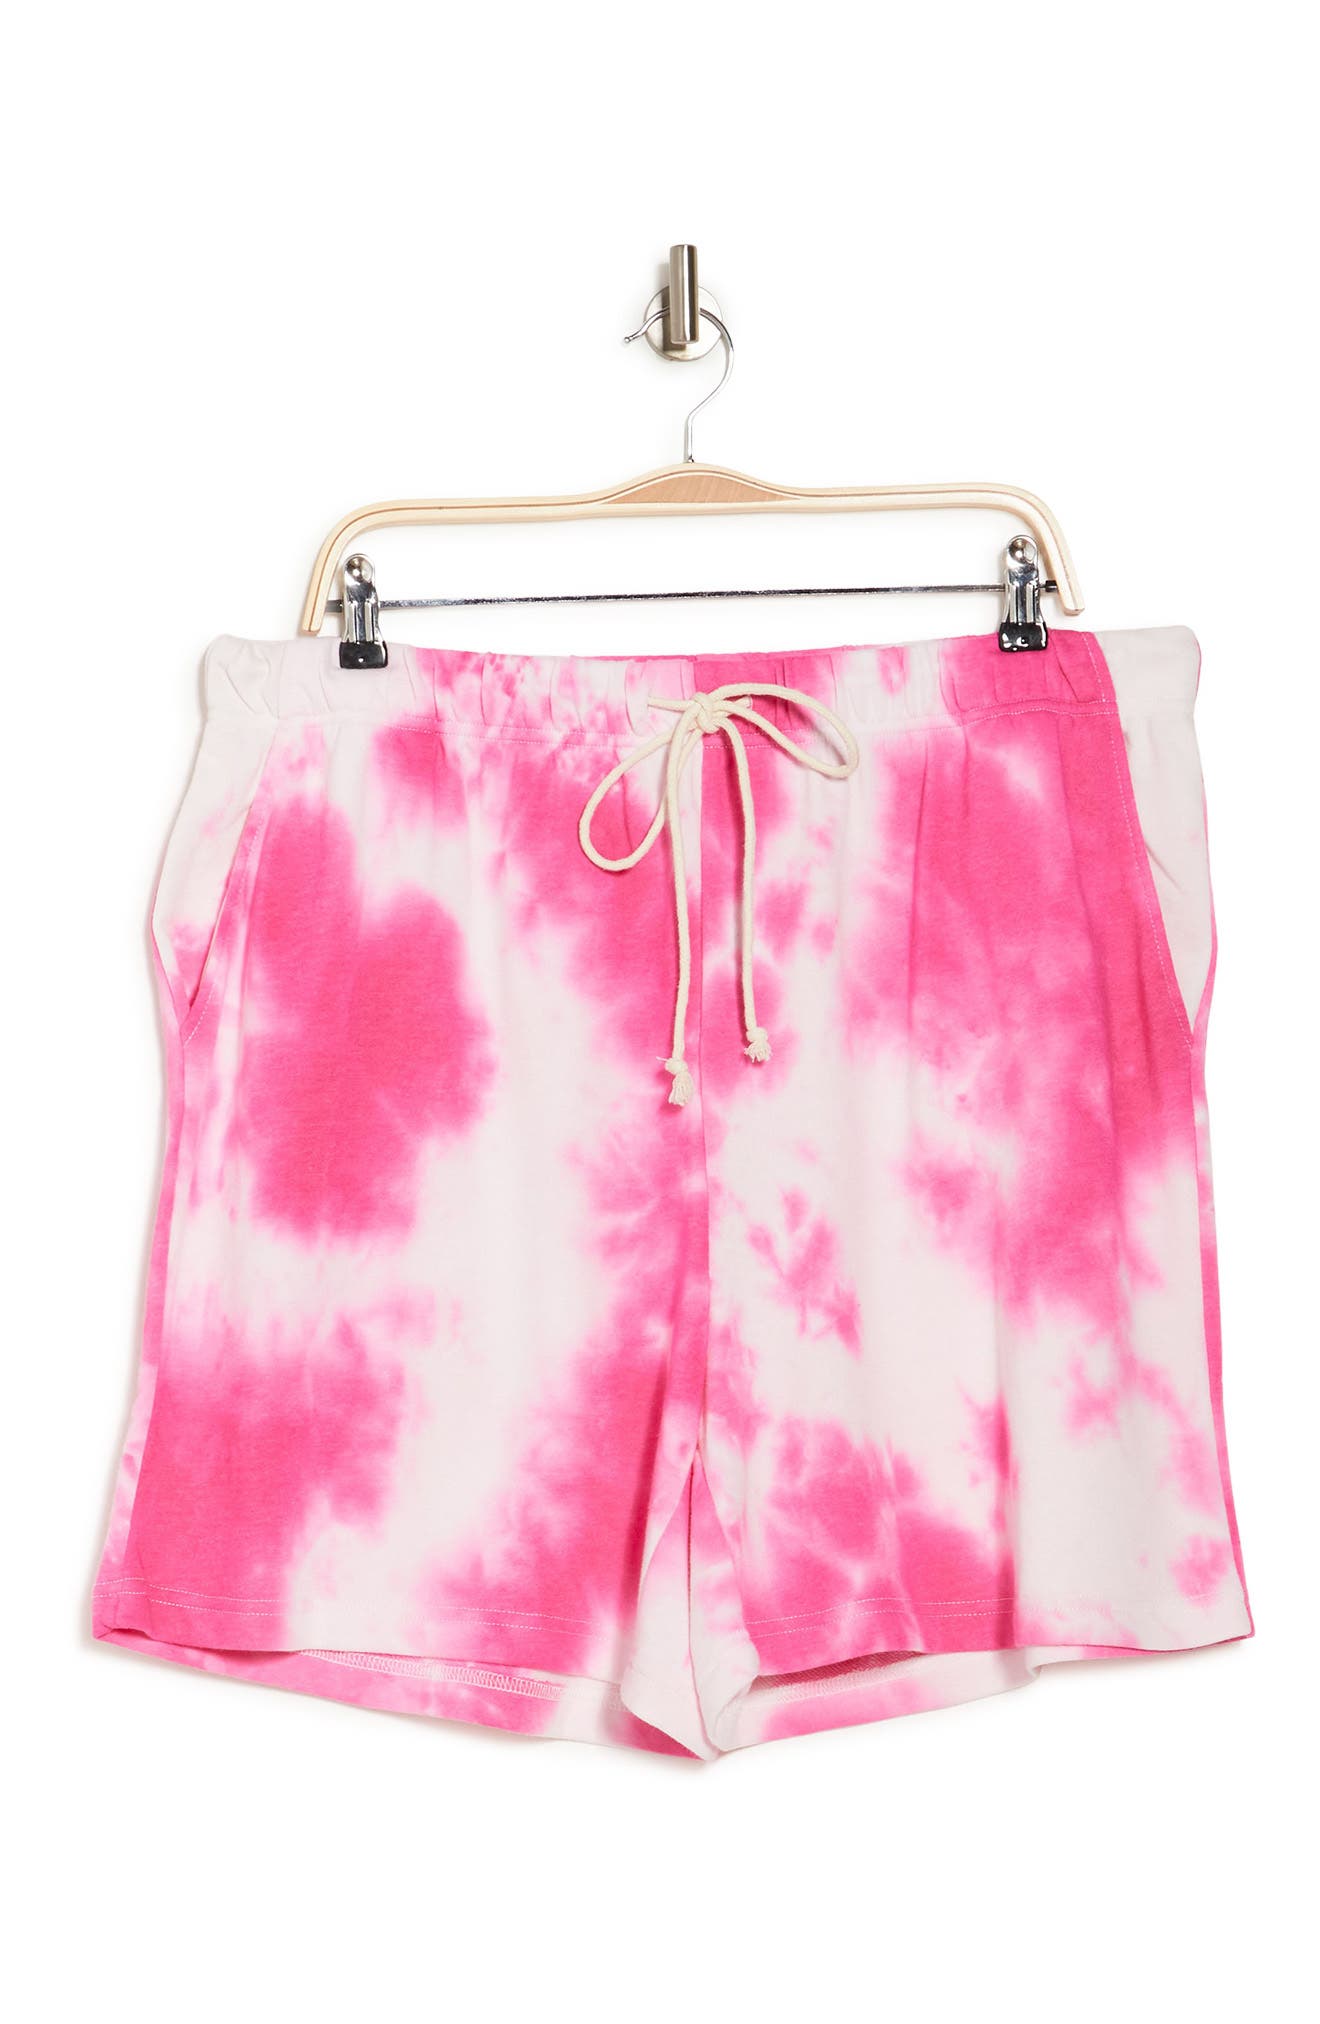 Melloday Tie Dye Print Shorts In Hot Pink